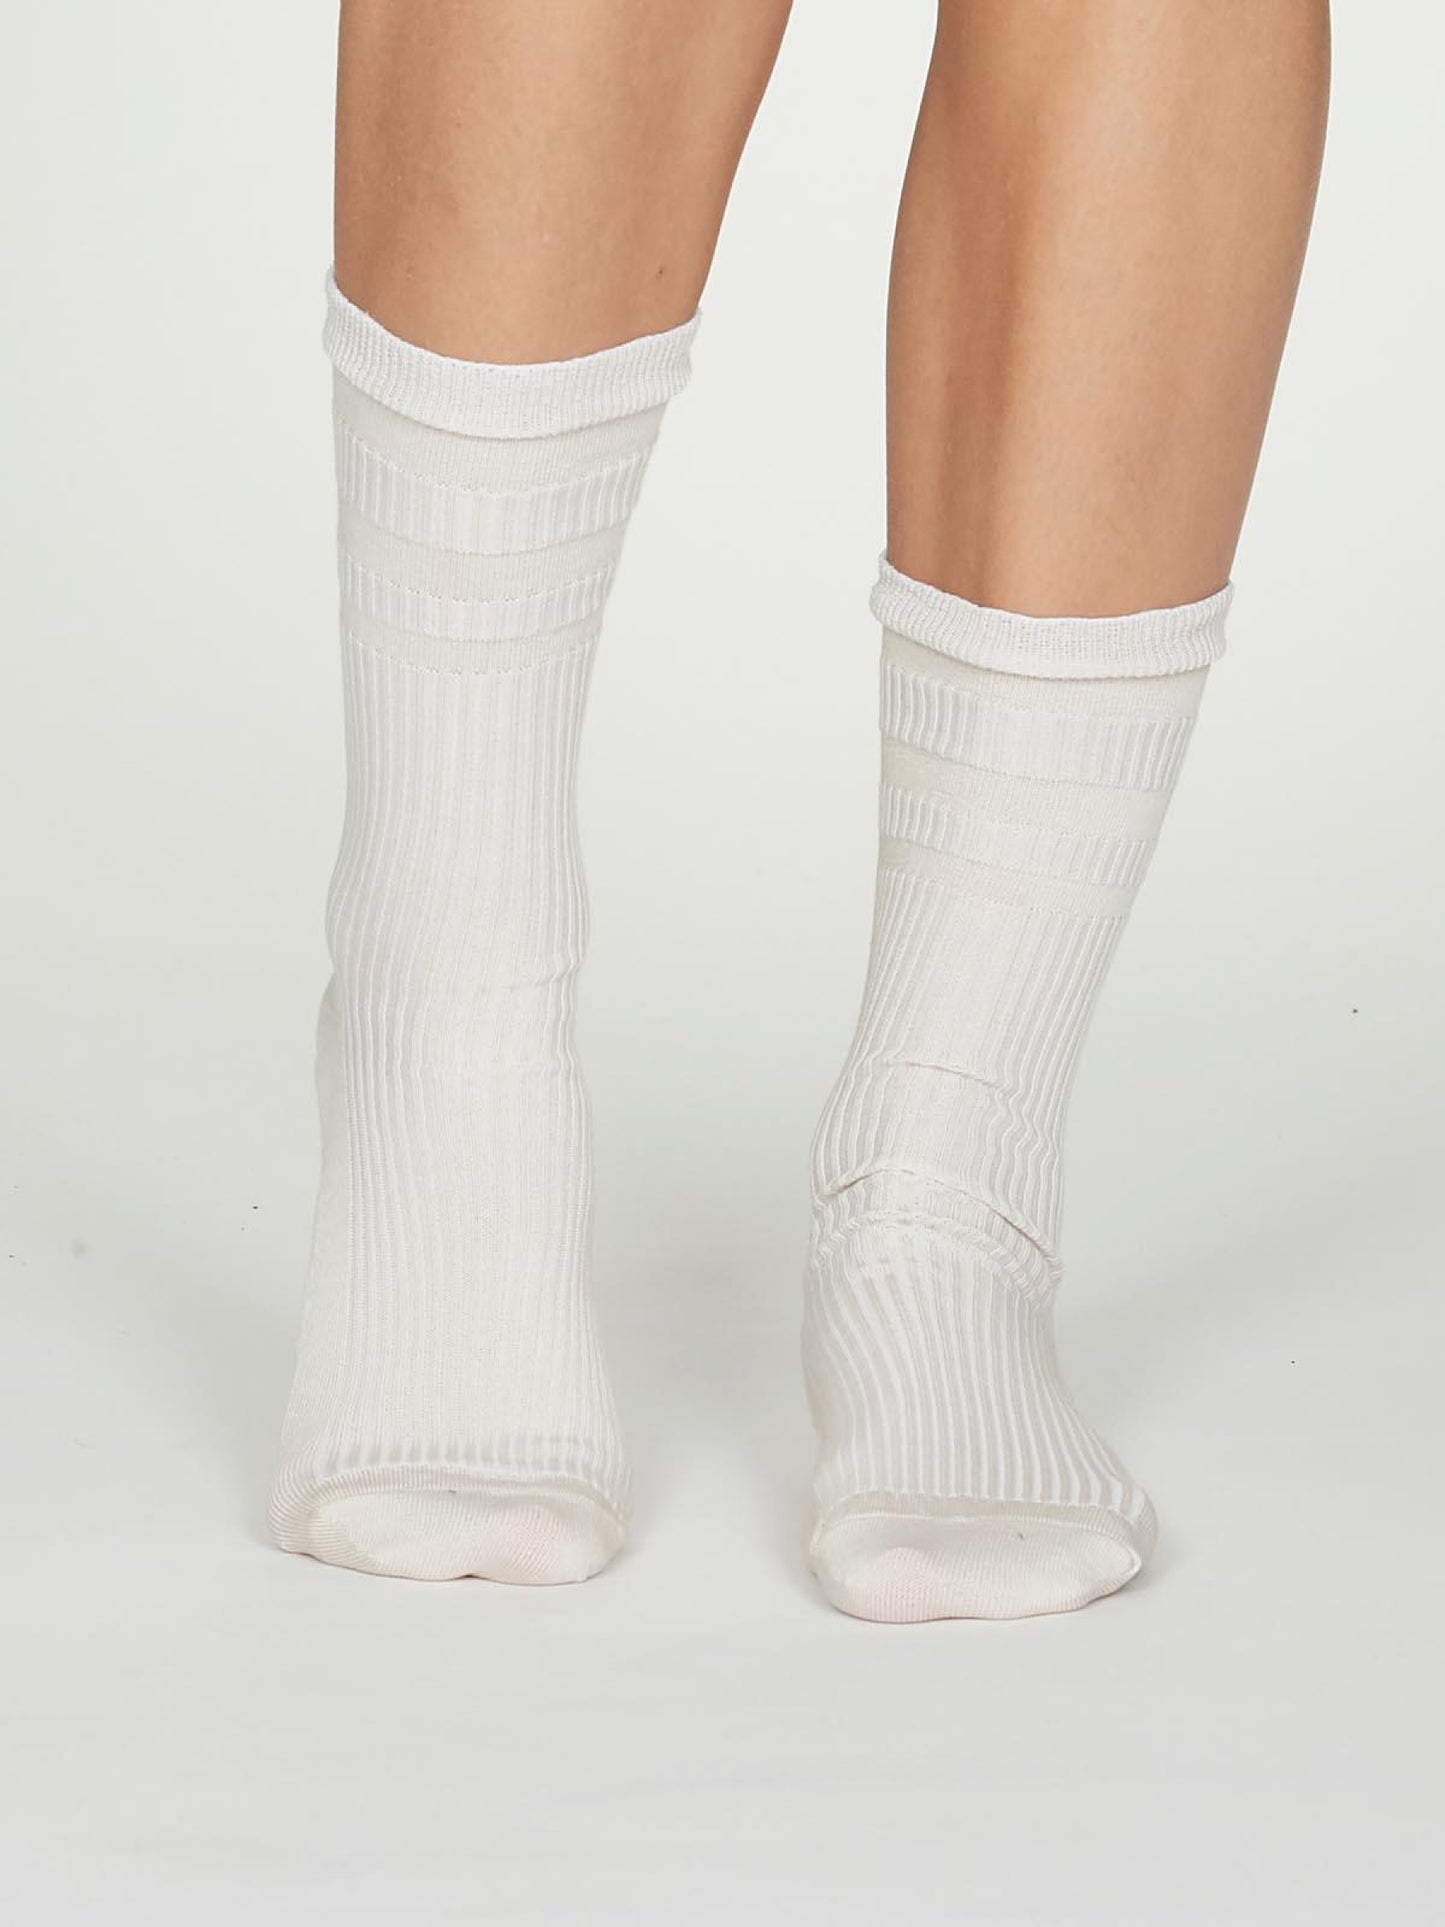 Beatrice - SeaCell - Modal - Socks